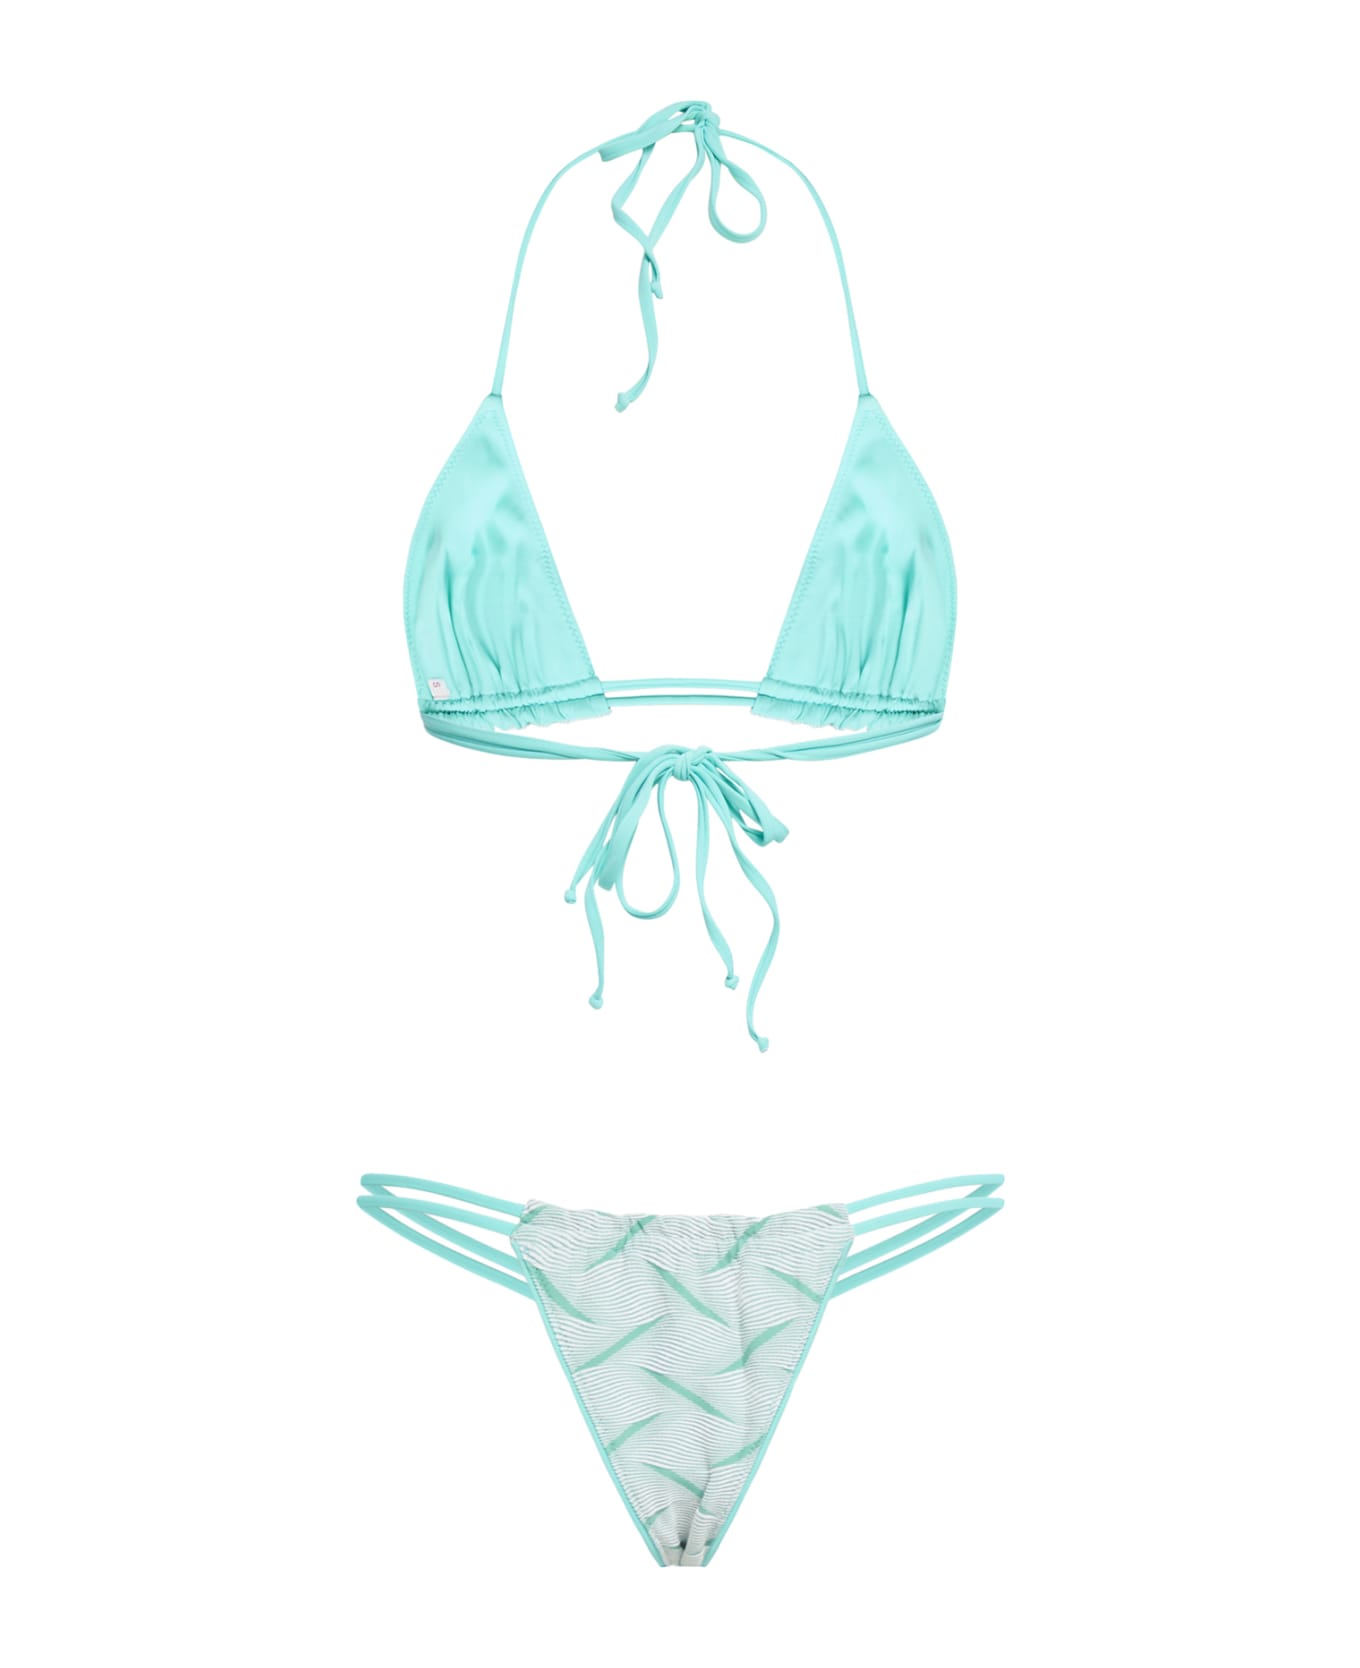 Sucrette Bikini - Onde Verdi